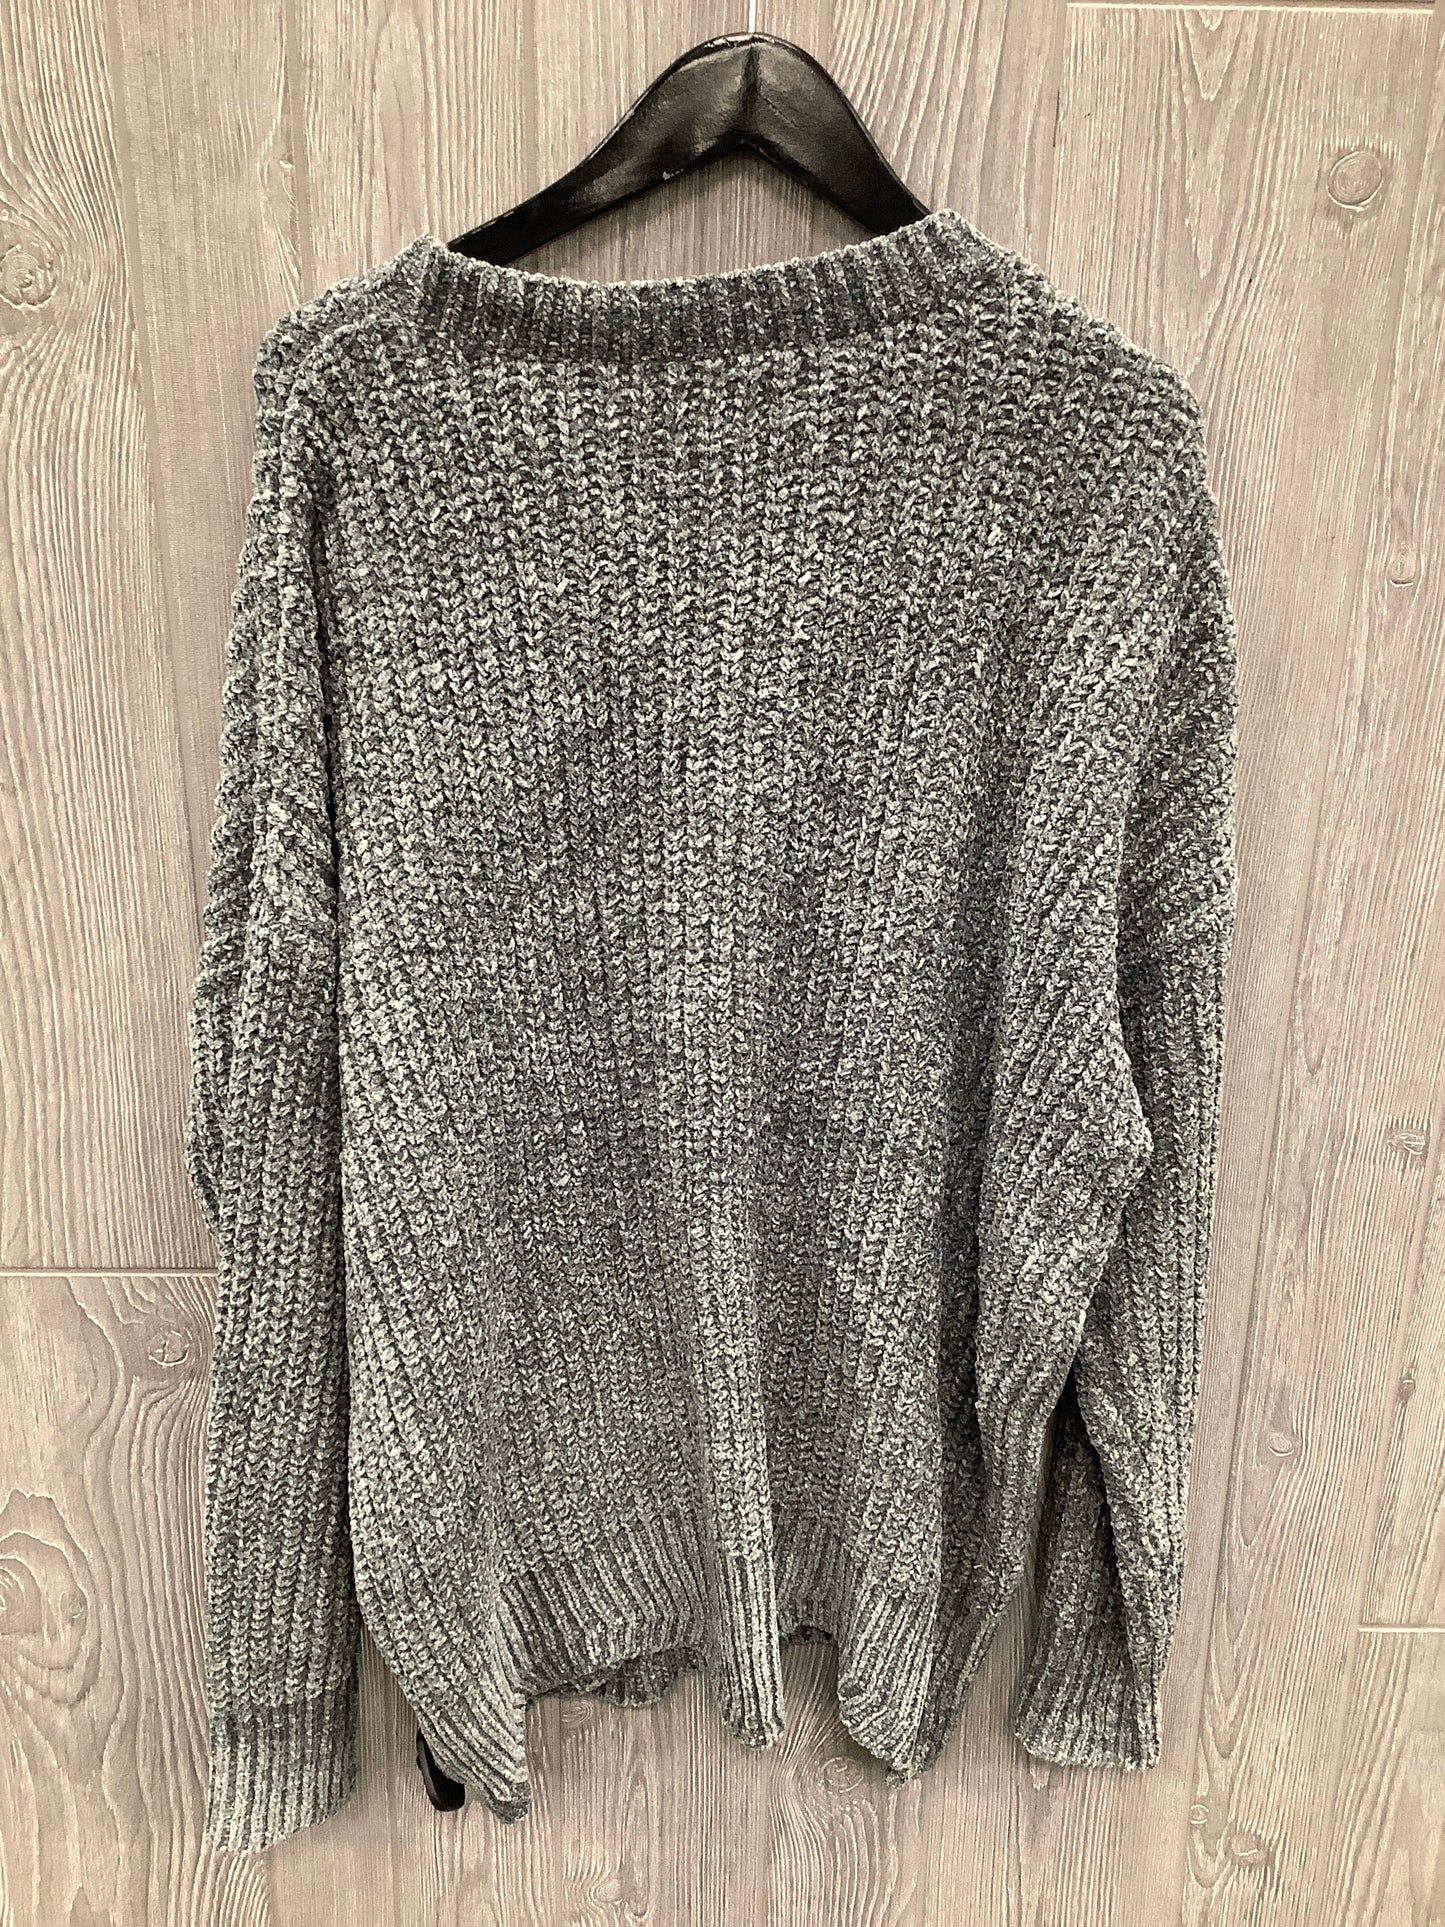 Sweater By Reborn J  Size: 3x